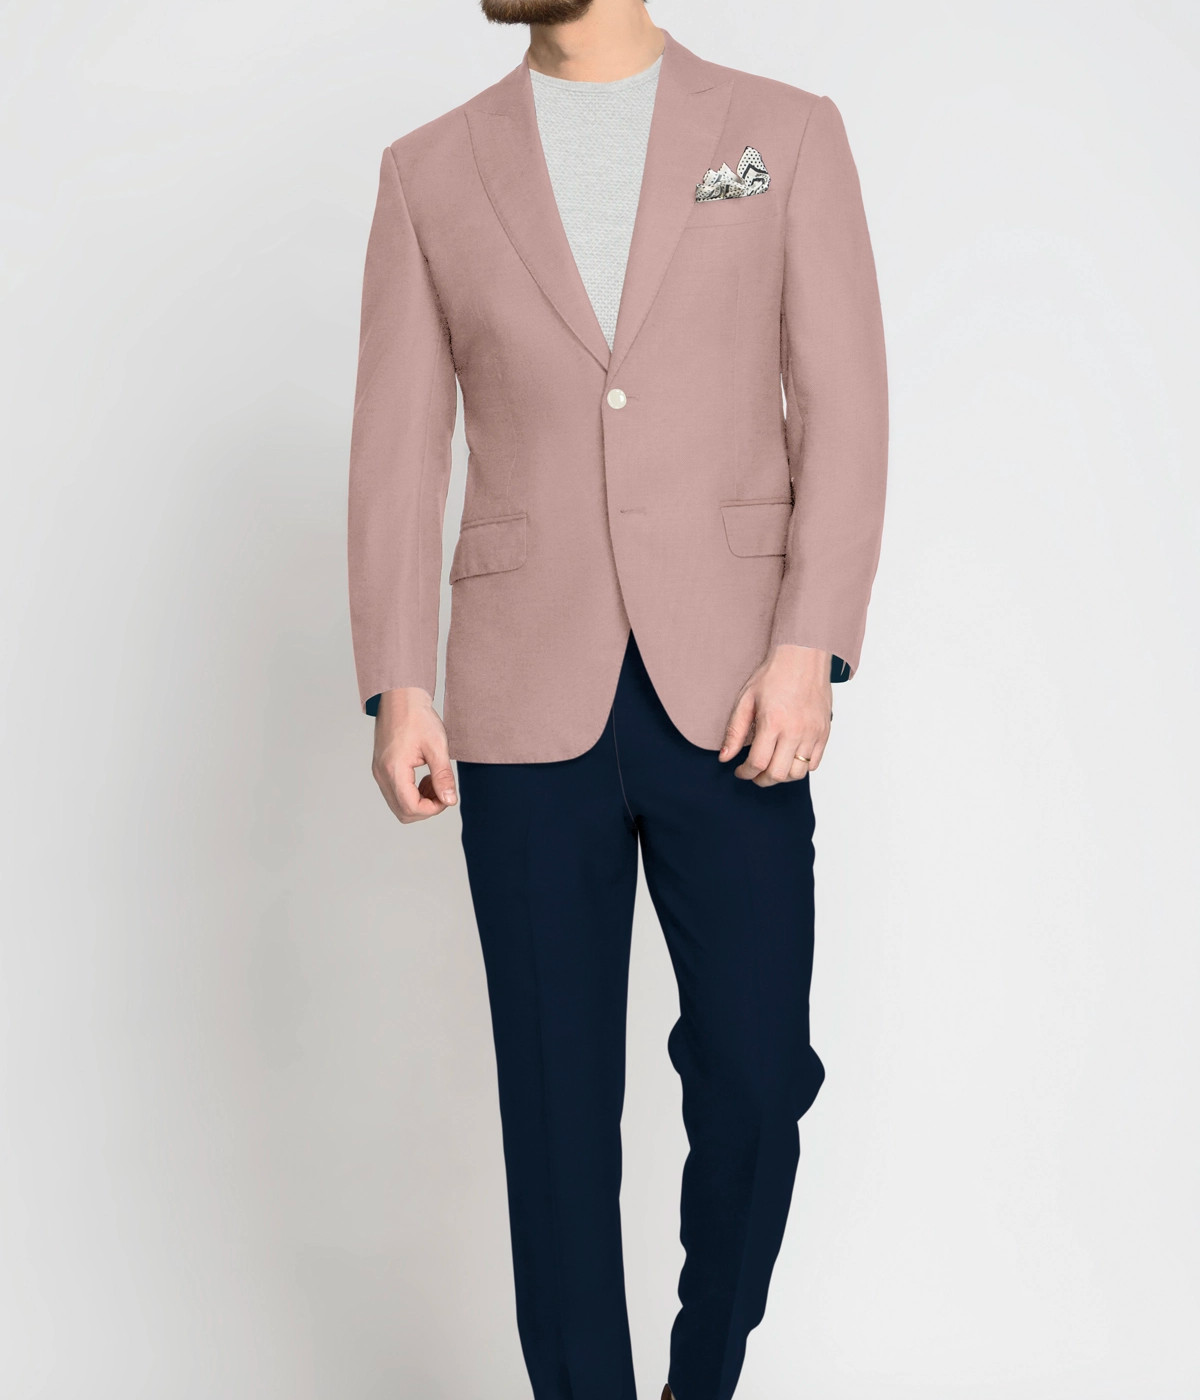 Soft Pink Tailored Fit Cotton Linen Shirt - Natural Fibres